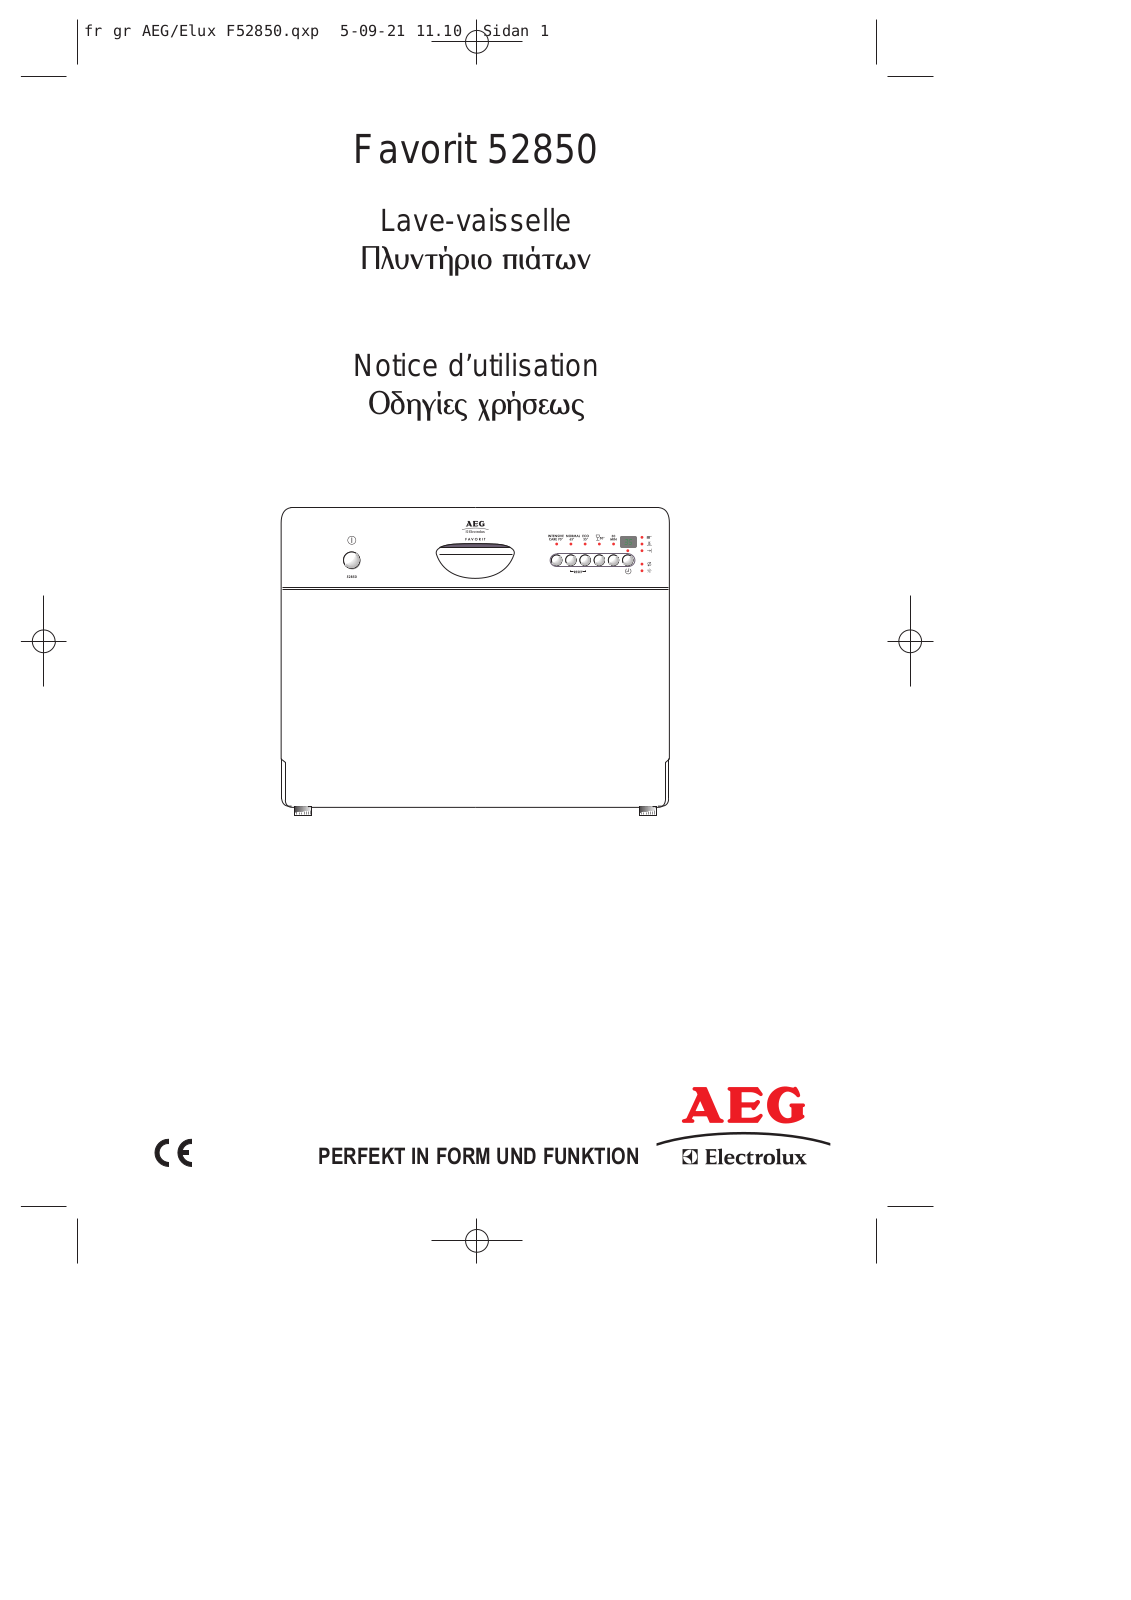 AEG F52850S User Manual